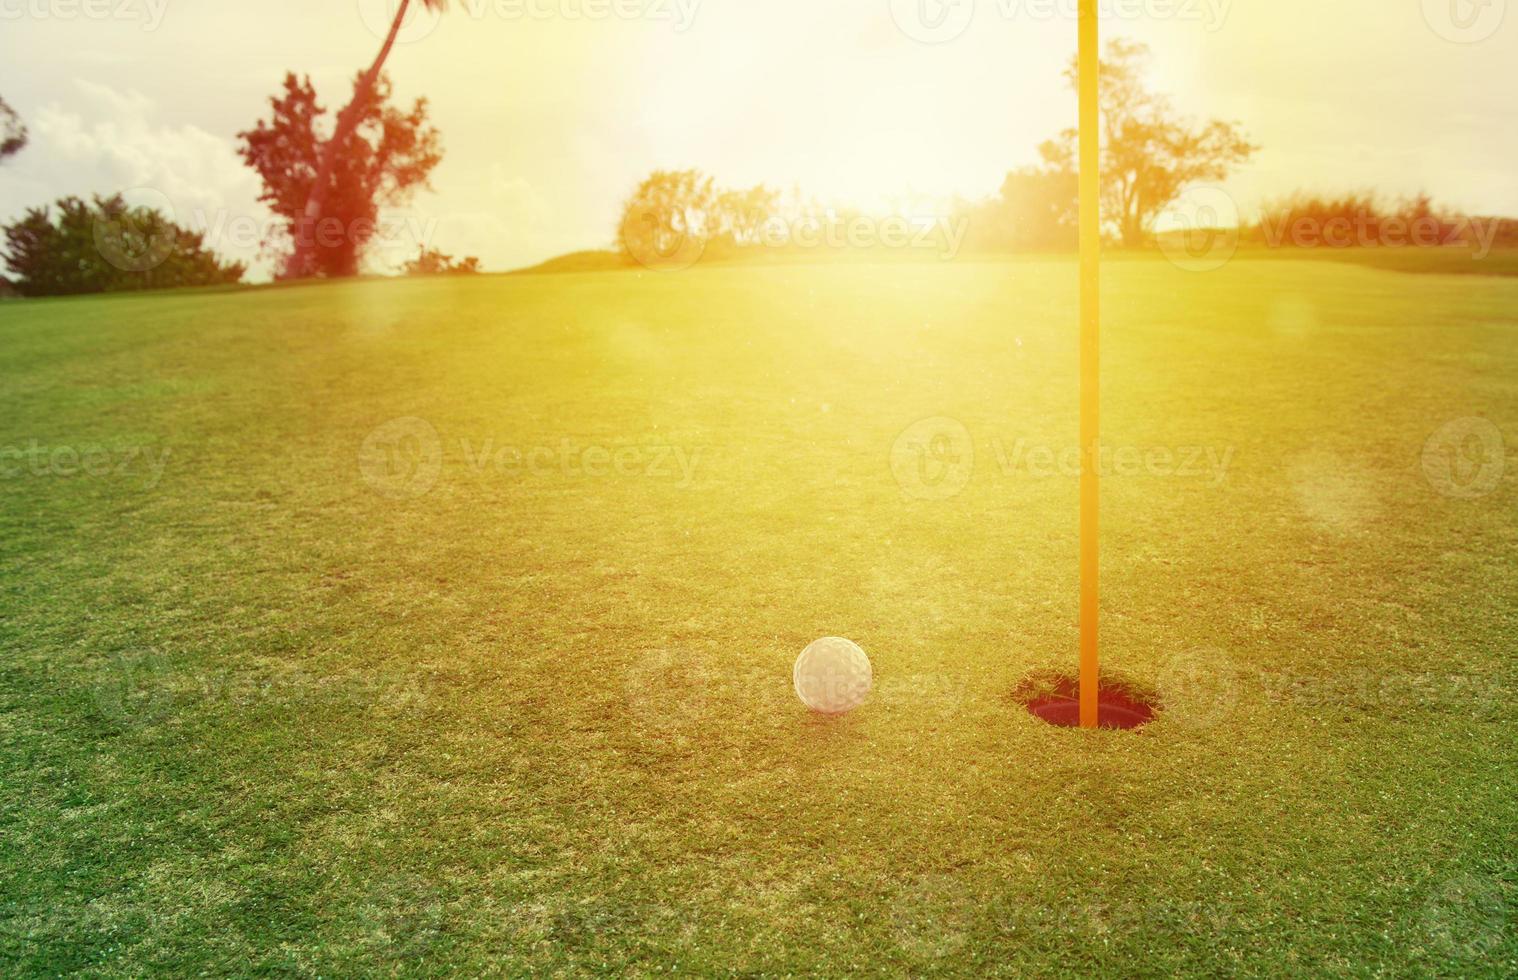 Golf ball near the hole in a grass field photo